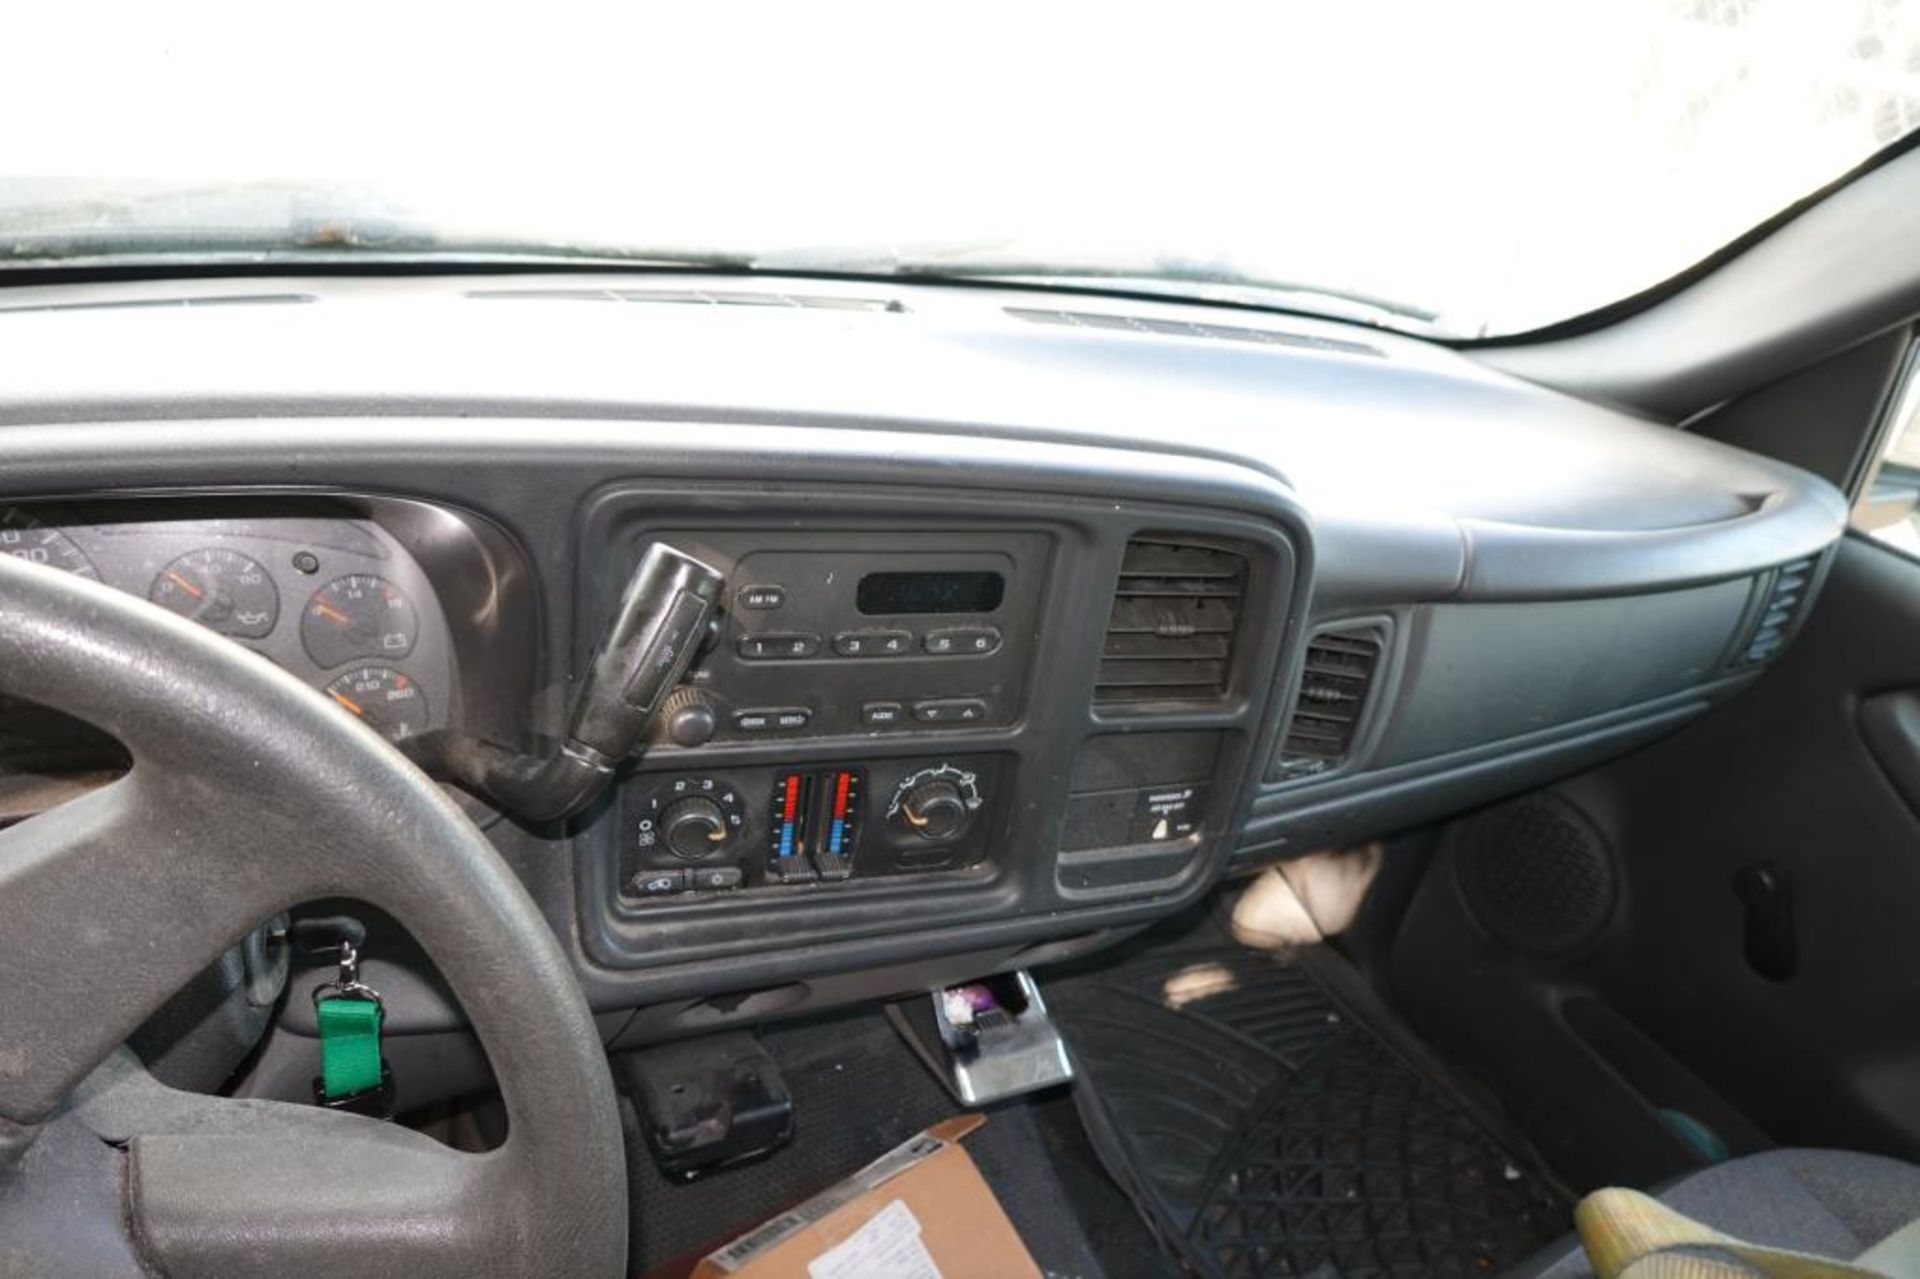 2006 Chevrolet Silverado 2500 HD Pickup Truck - Image 4 of 13